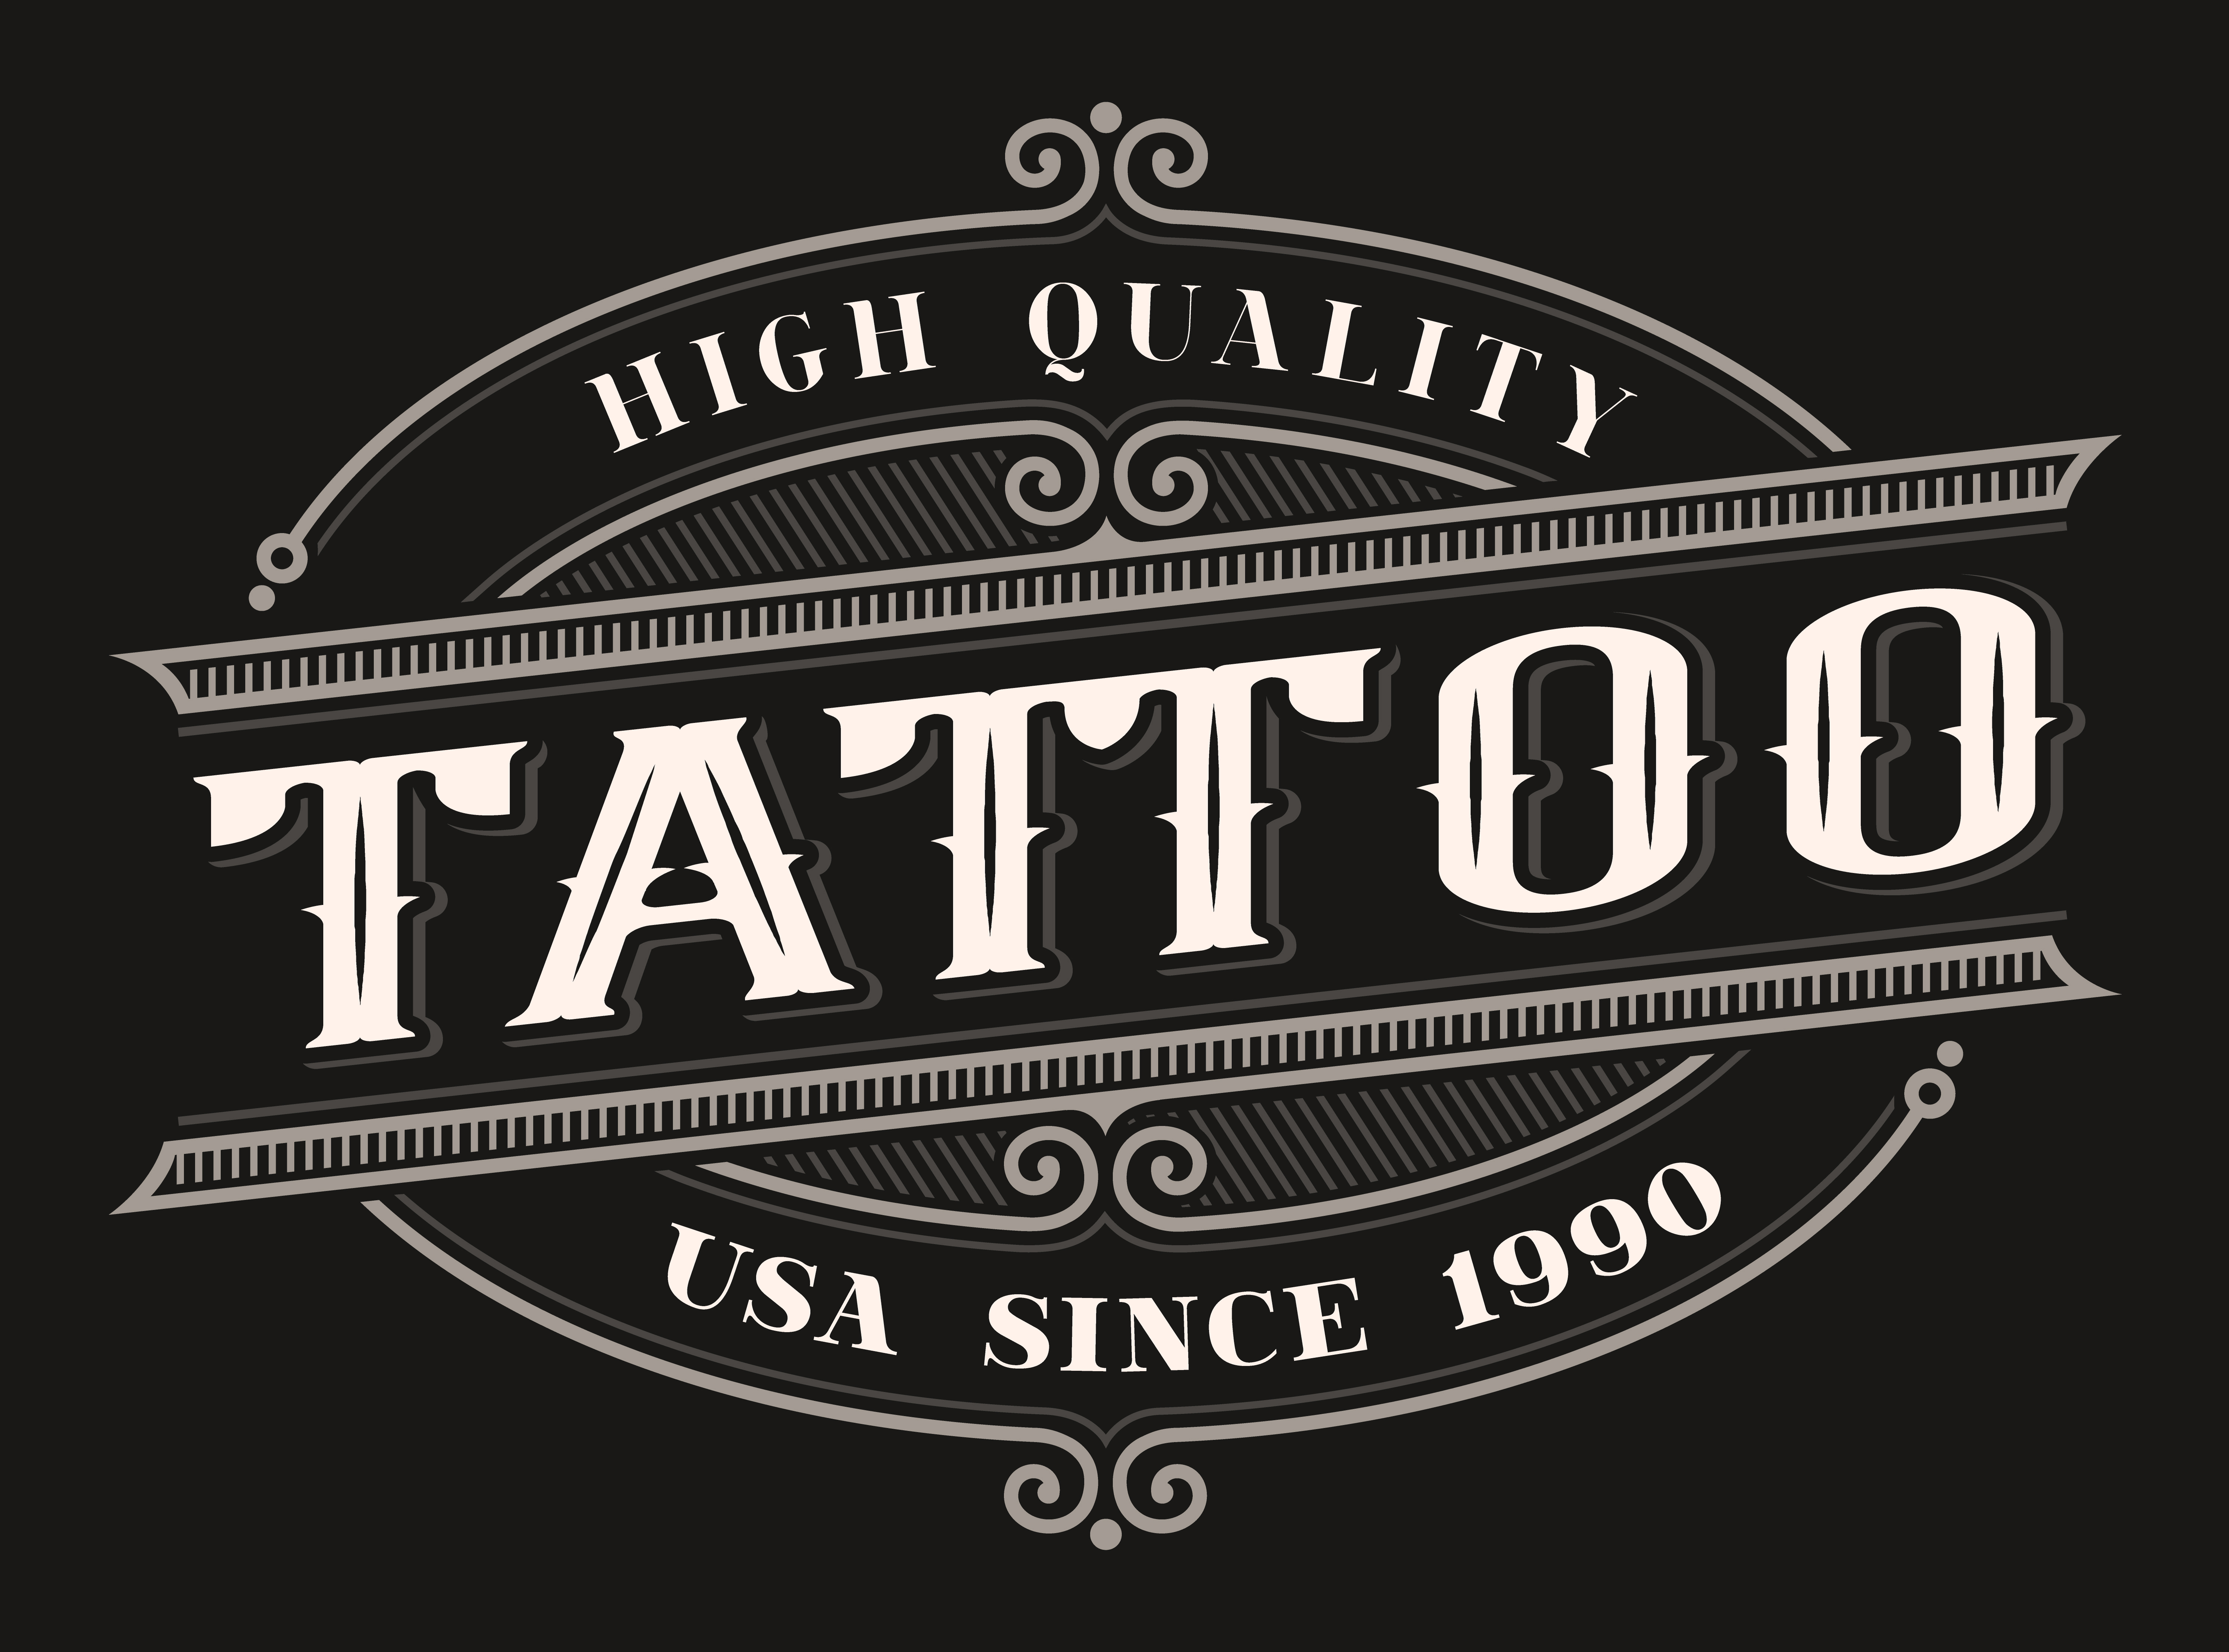 Download Vintage logo for the tattoo studio - Download Free Vectors, Clipart Graphics & Vector Art